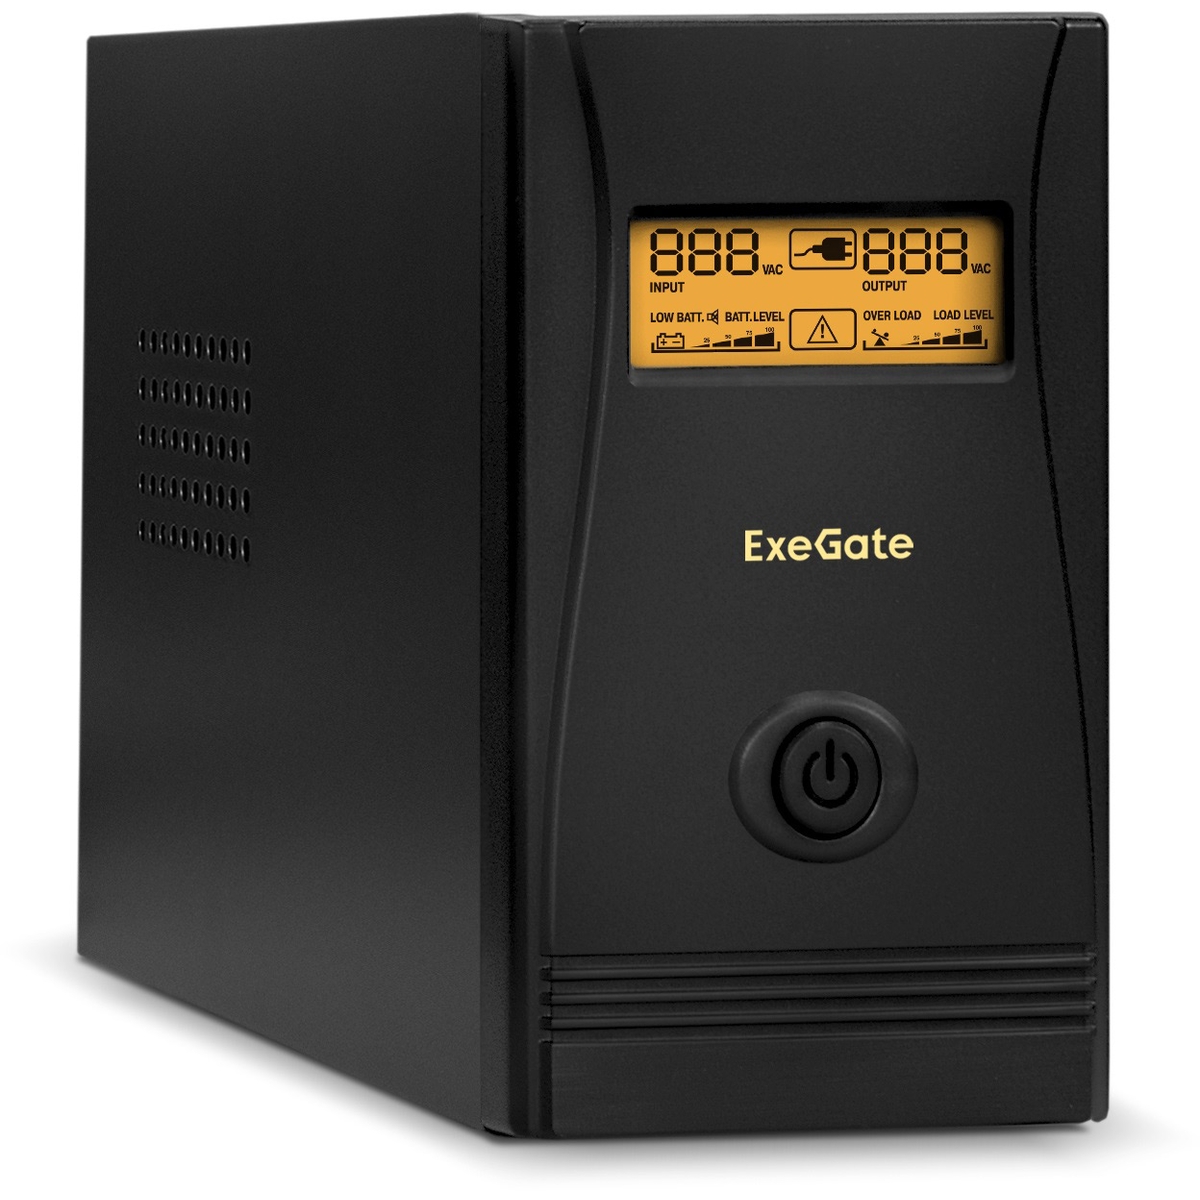  ExeGate SpecialPro Smart LLB-400.LCD.AVR.4C13.RJ.USB